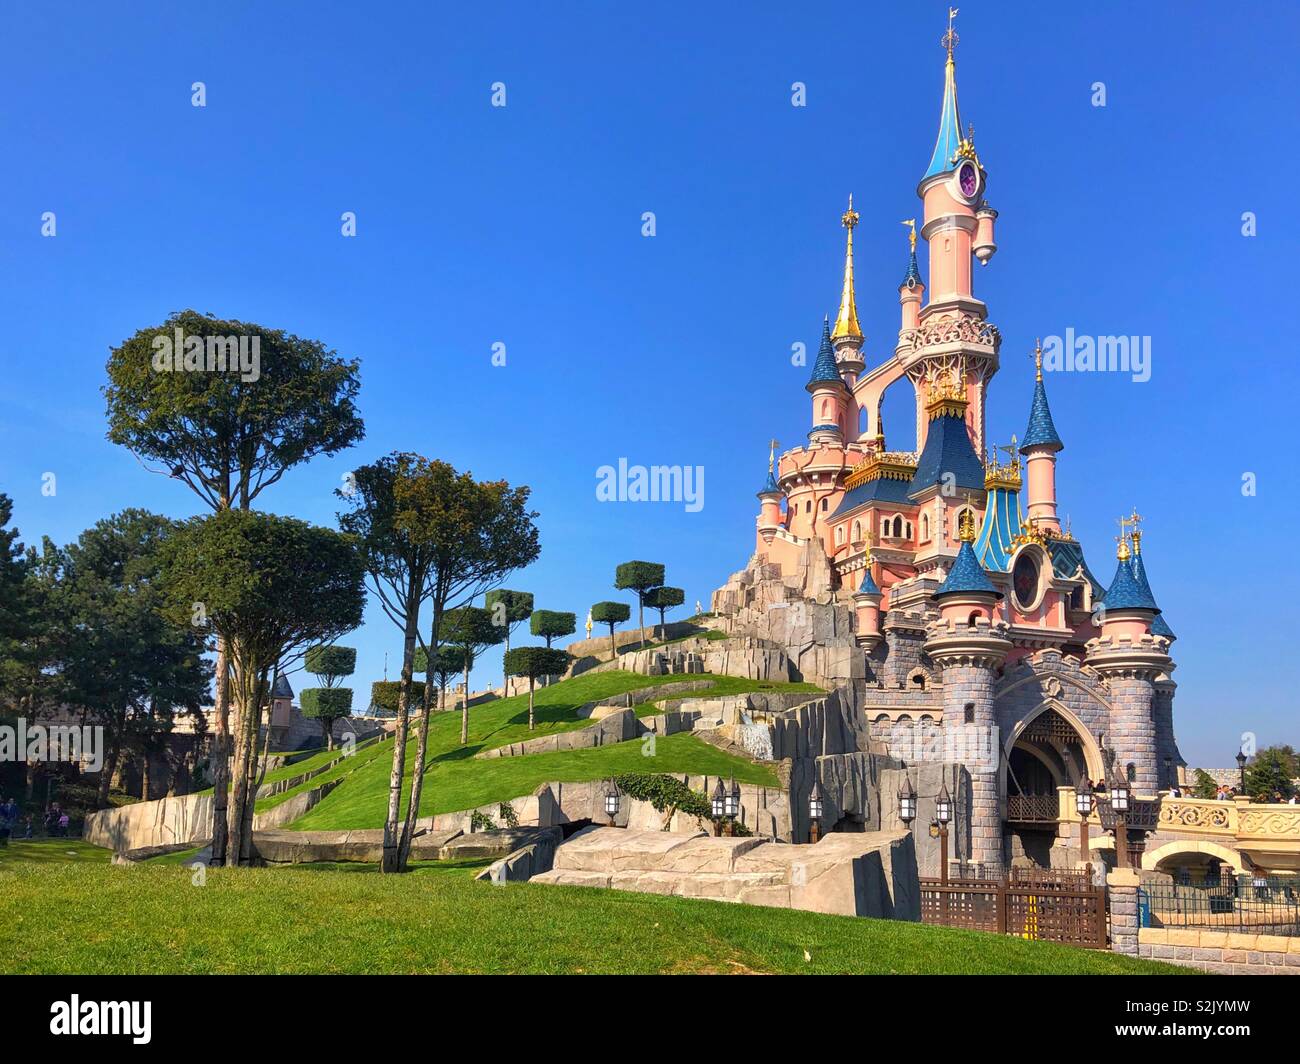 Il castello di Disney, Disneyland Paris. Foto Stock